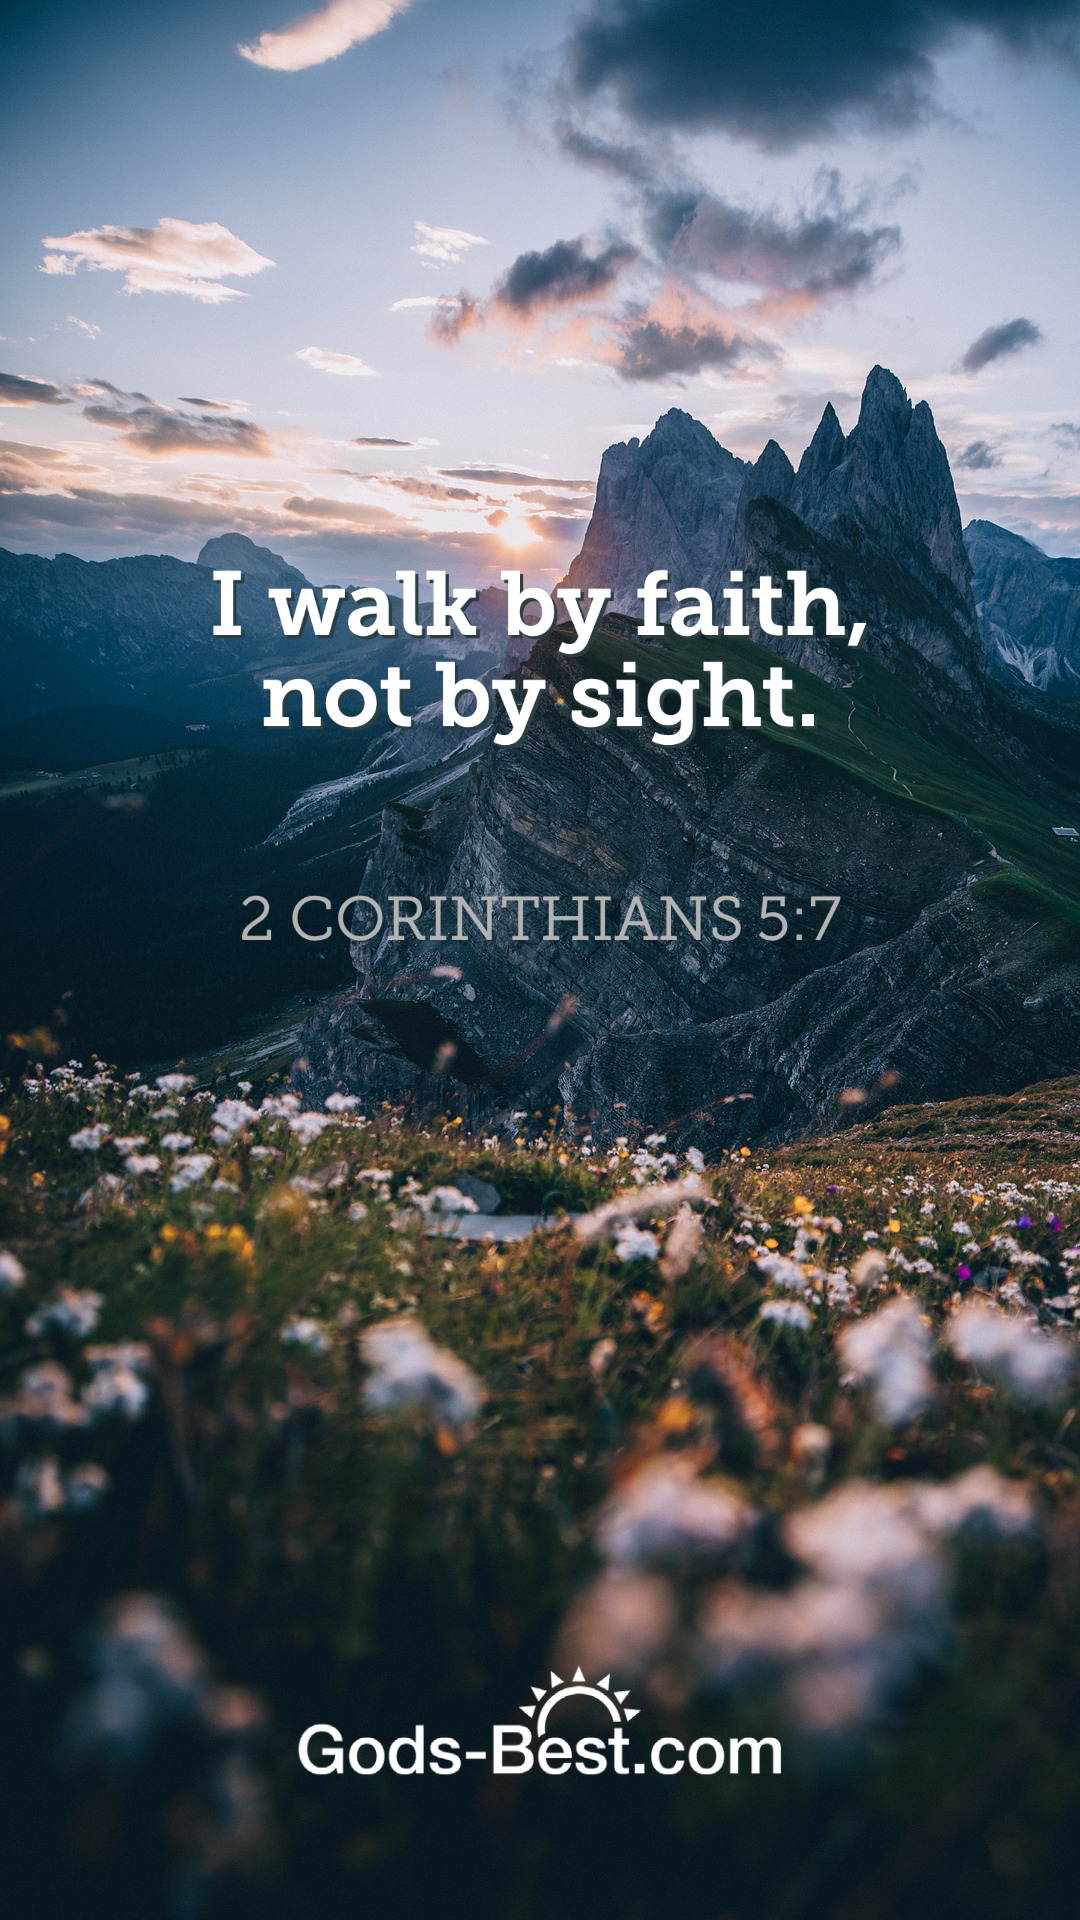 November 2021 Phone Wallpaper - Walk by faith not by sight